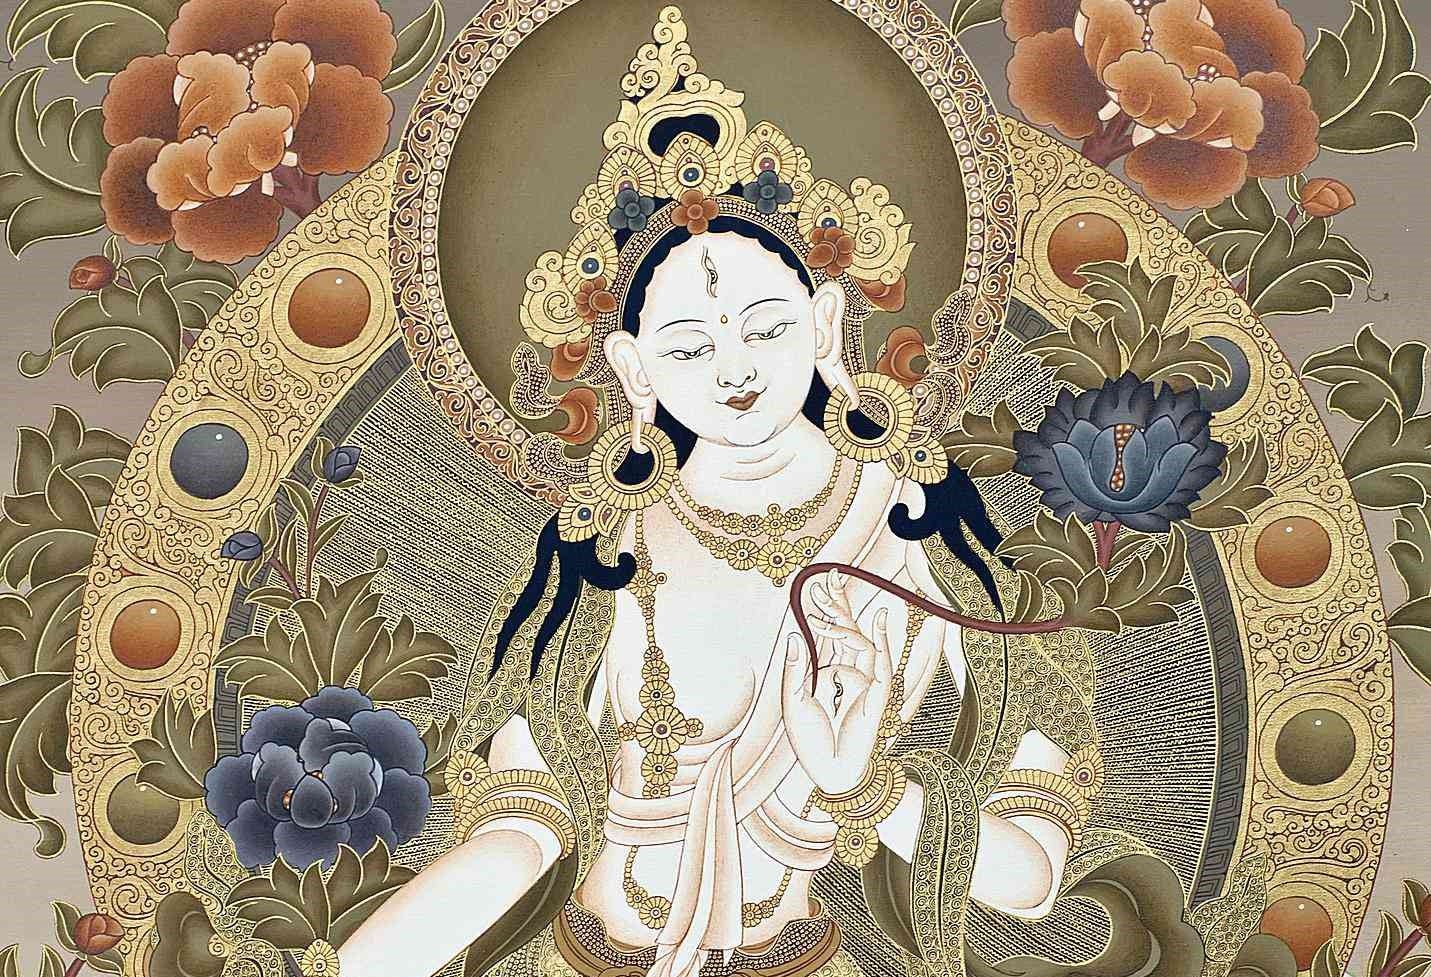 The Radiant Forms of Tara: Green Tara and White Tara